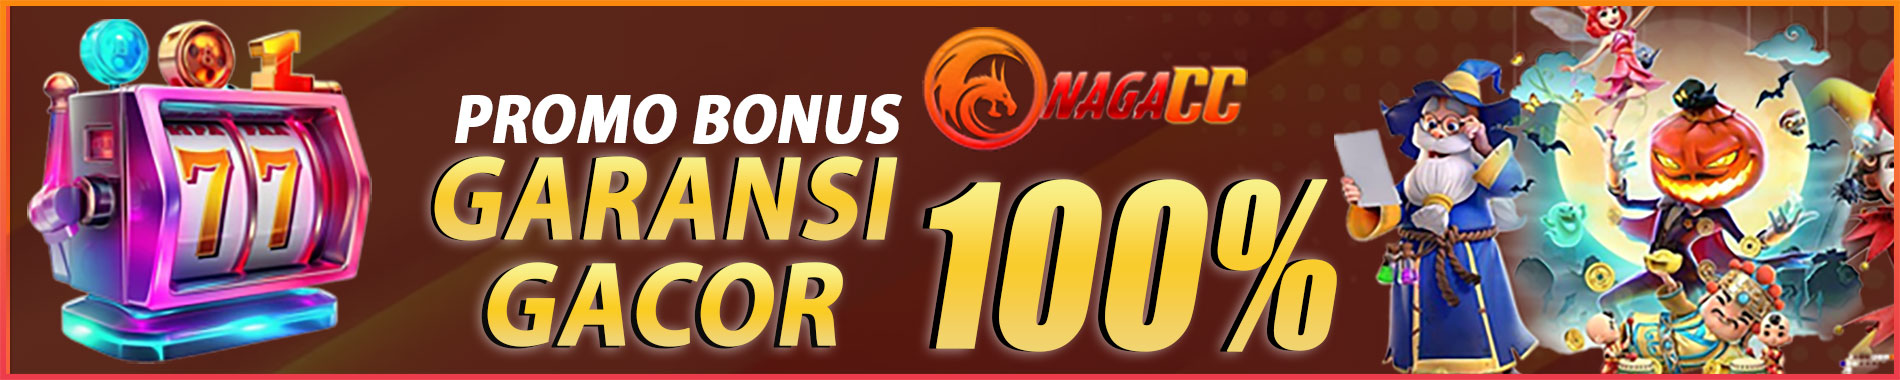 Bonus Garansi Gacor 100%